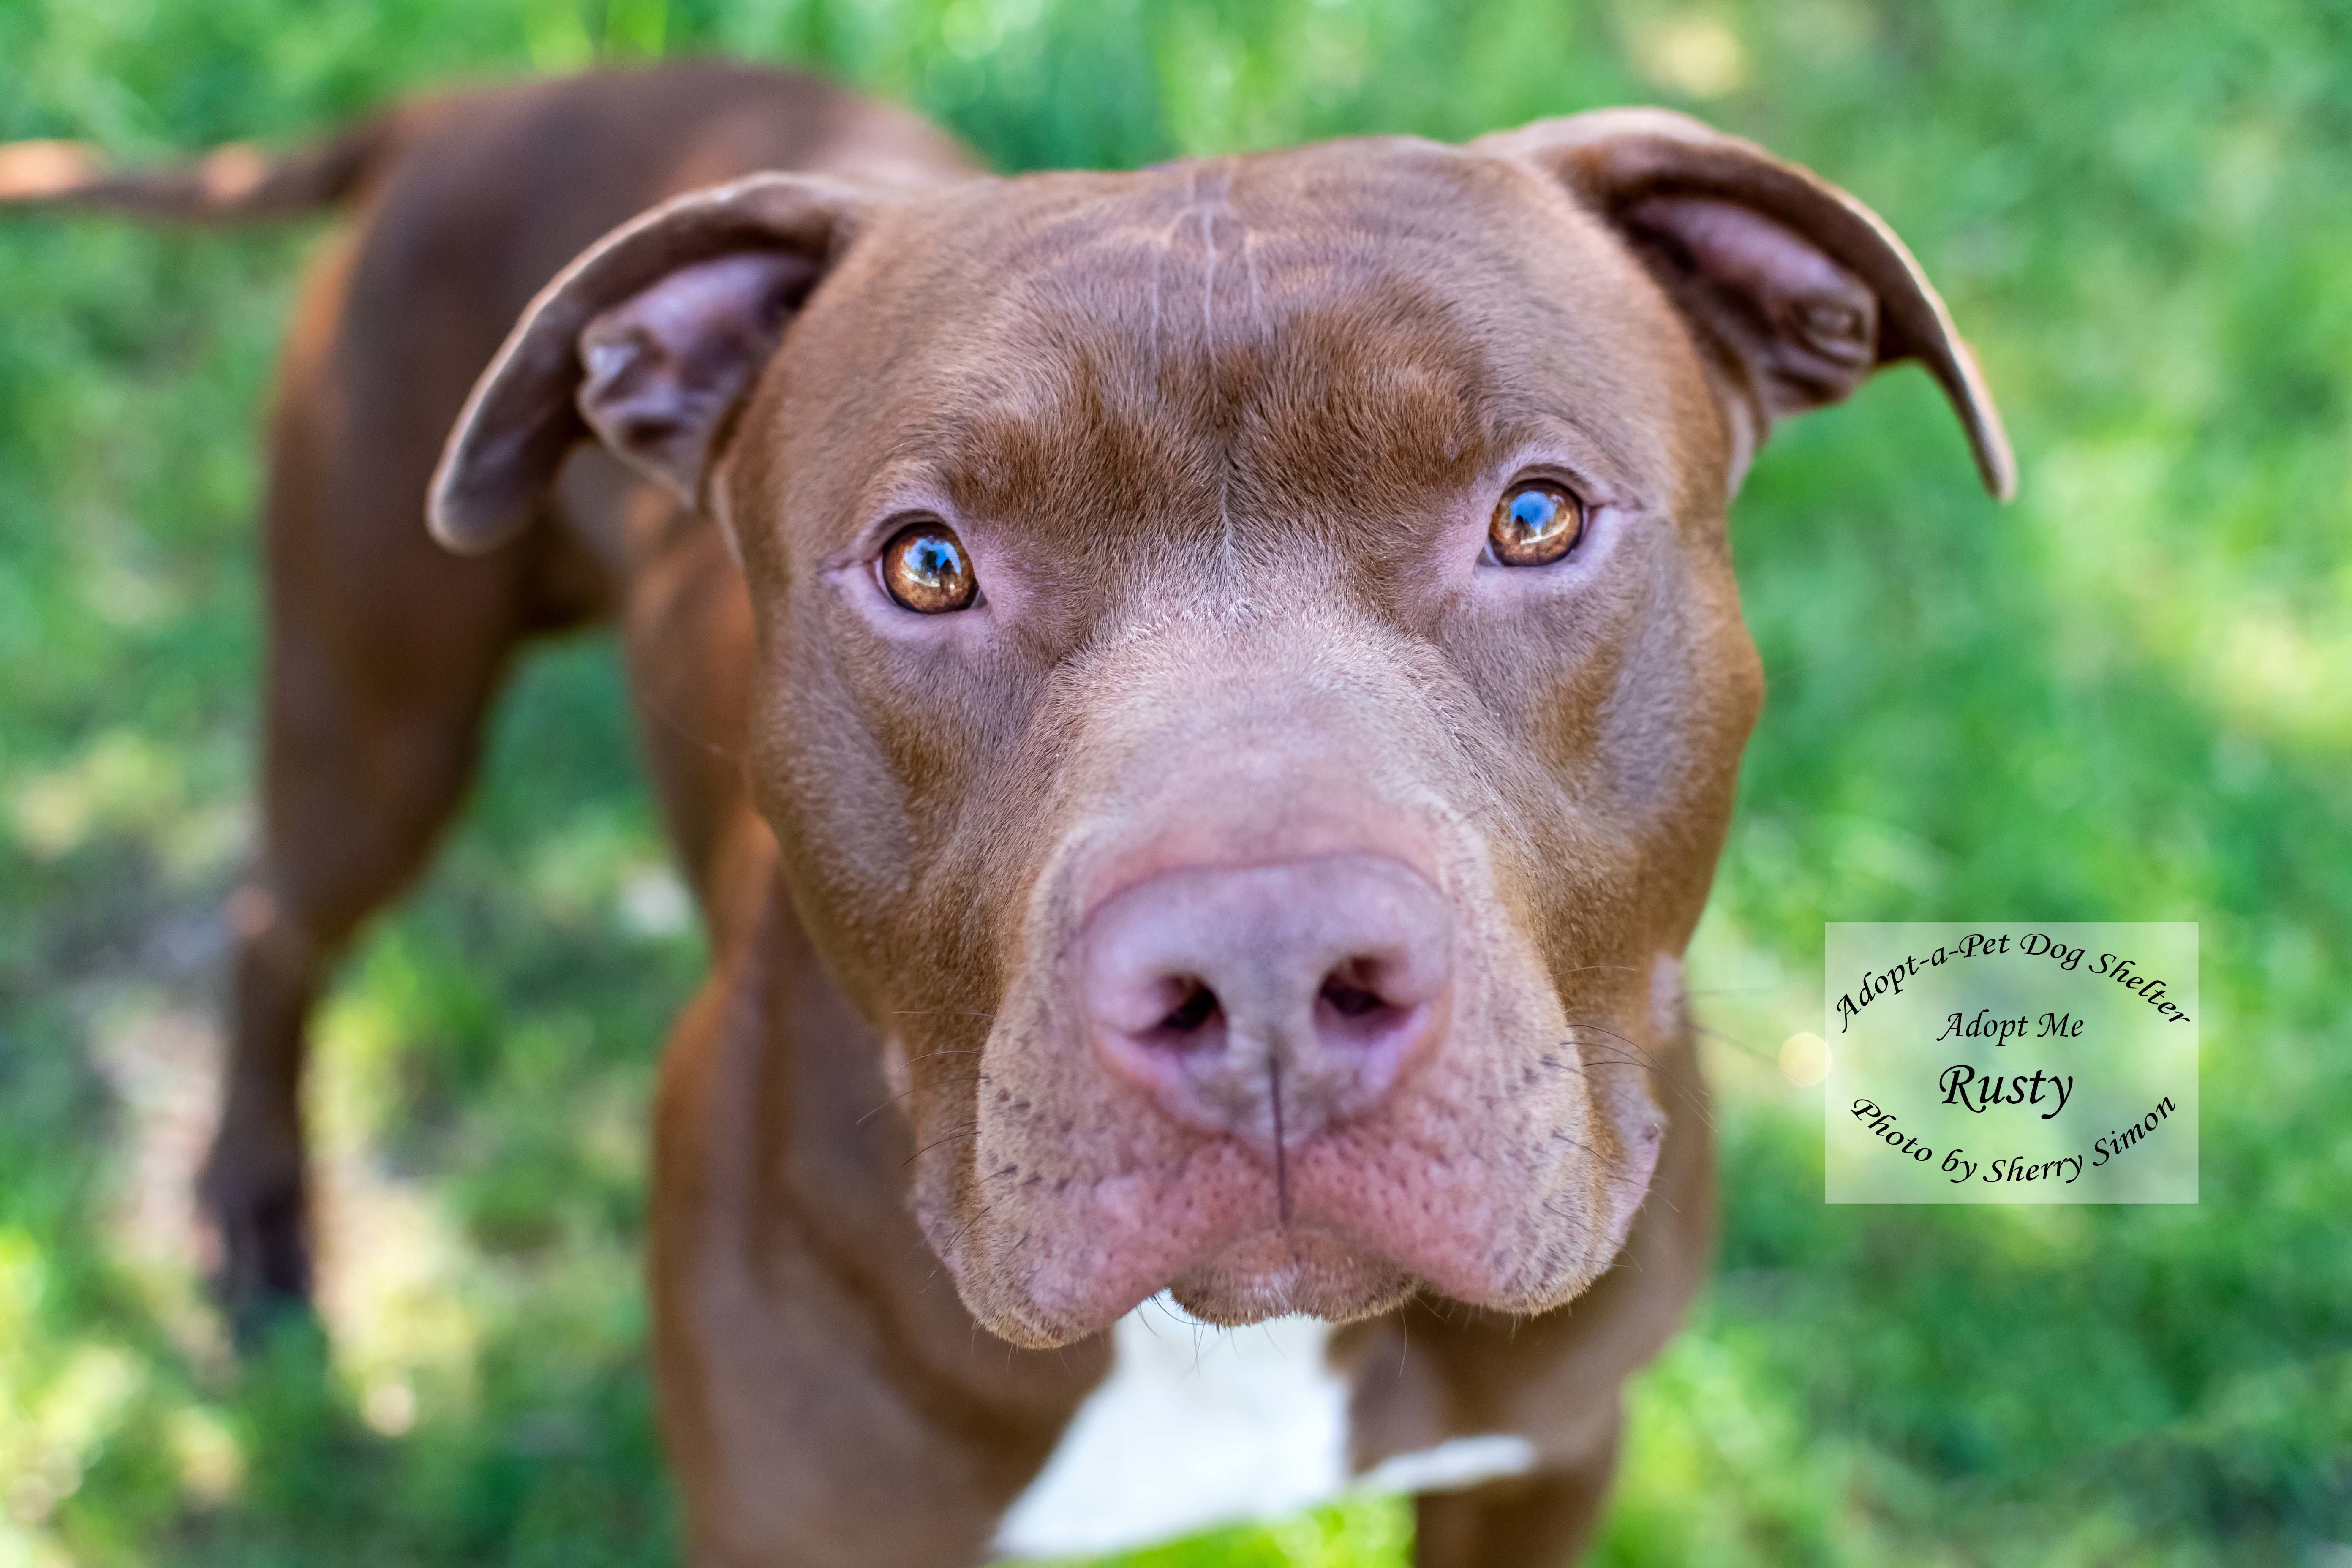 Adopt-A-Pet Dog of the Week: Rusty - GraysHarborTalk